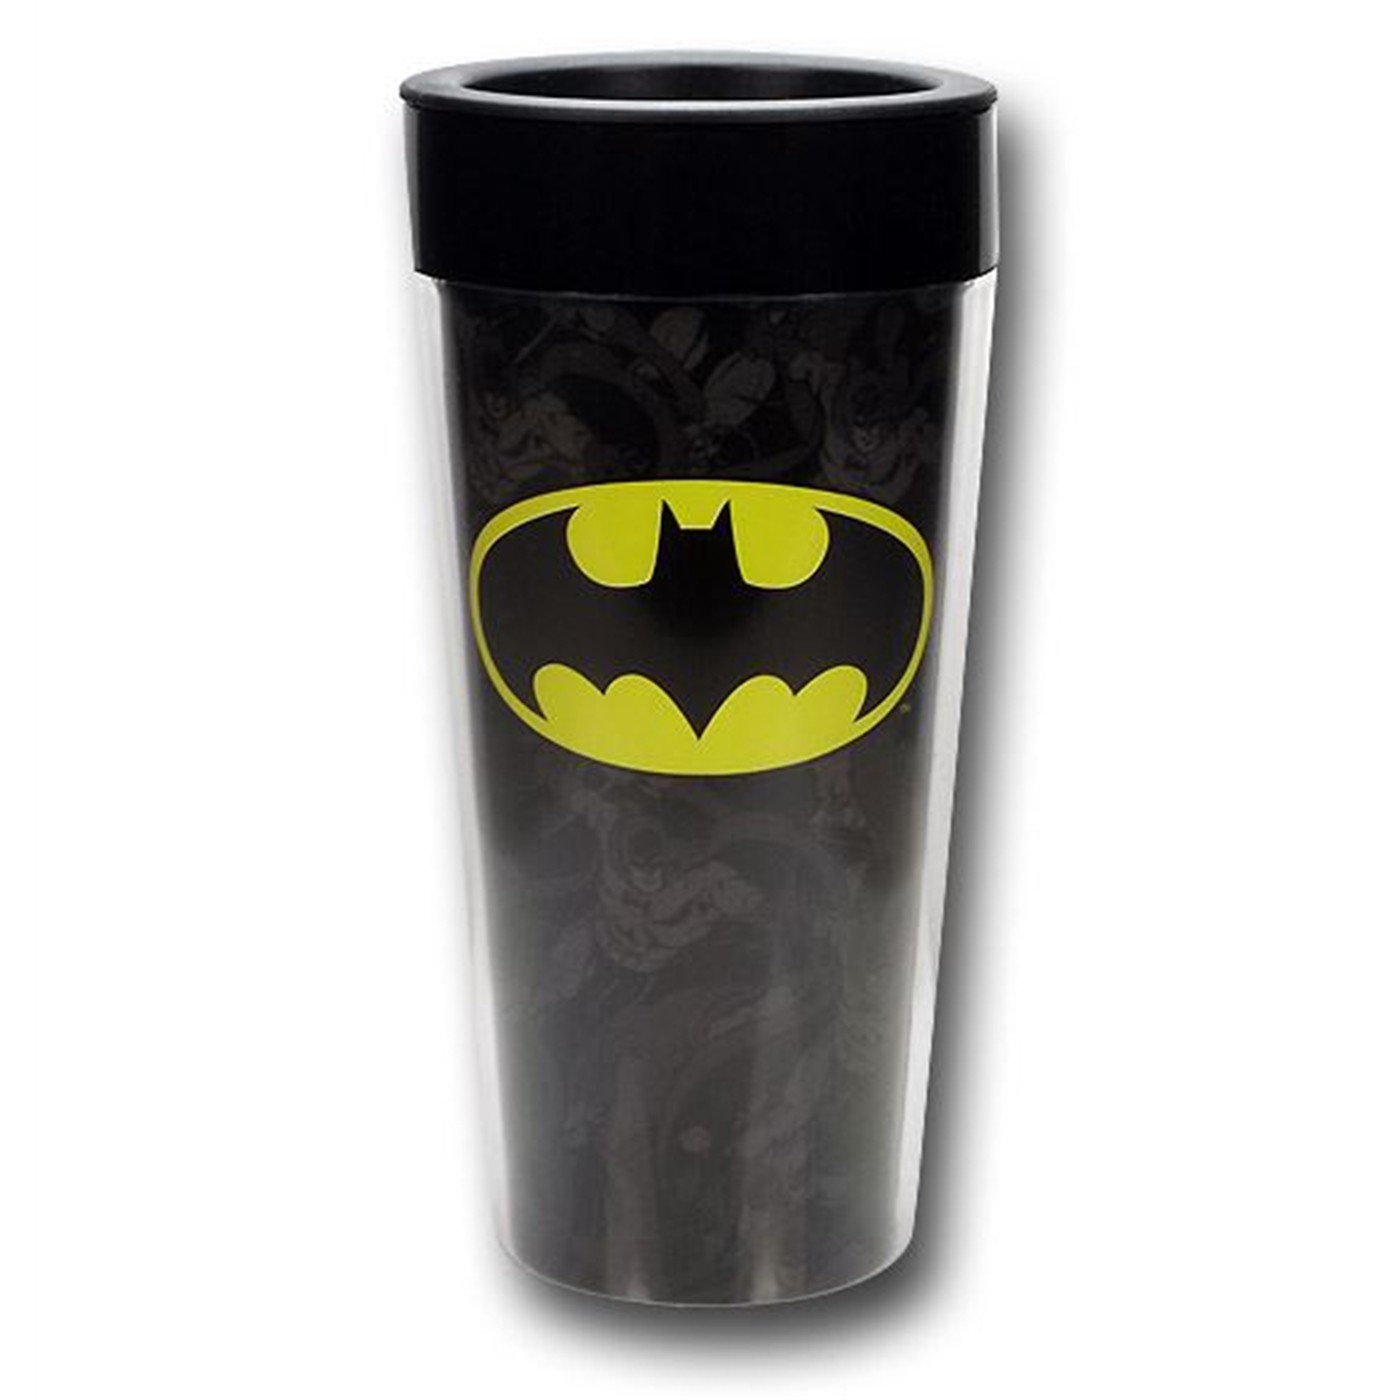 Batman Symbol & Image Travel Mug